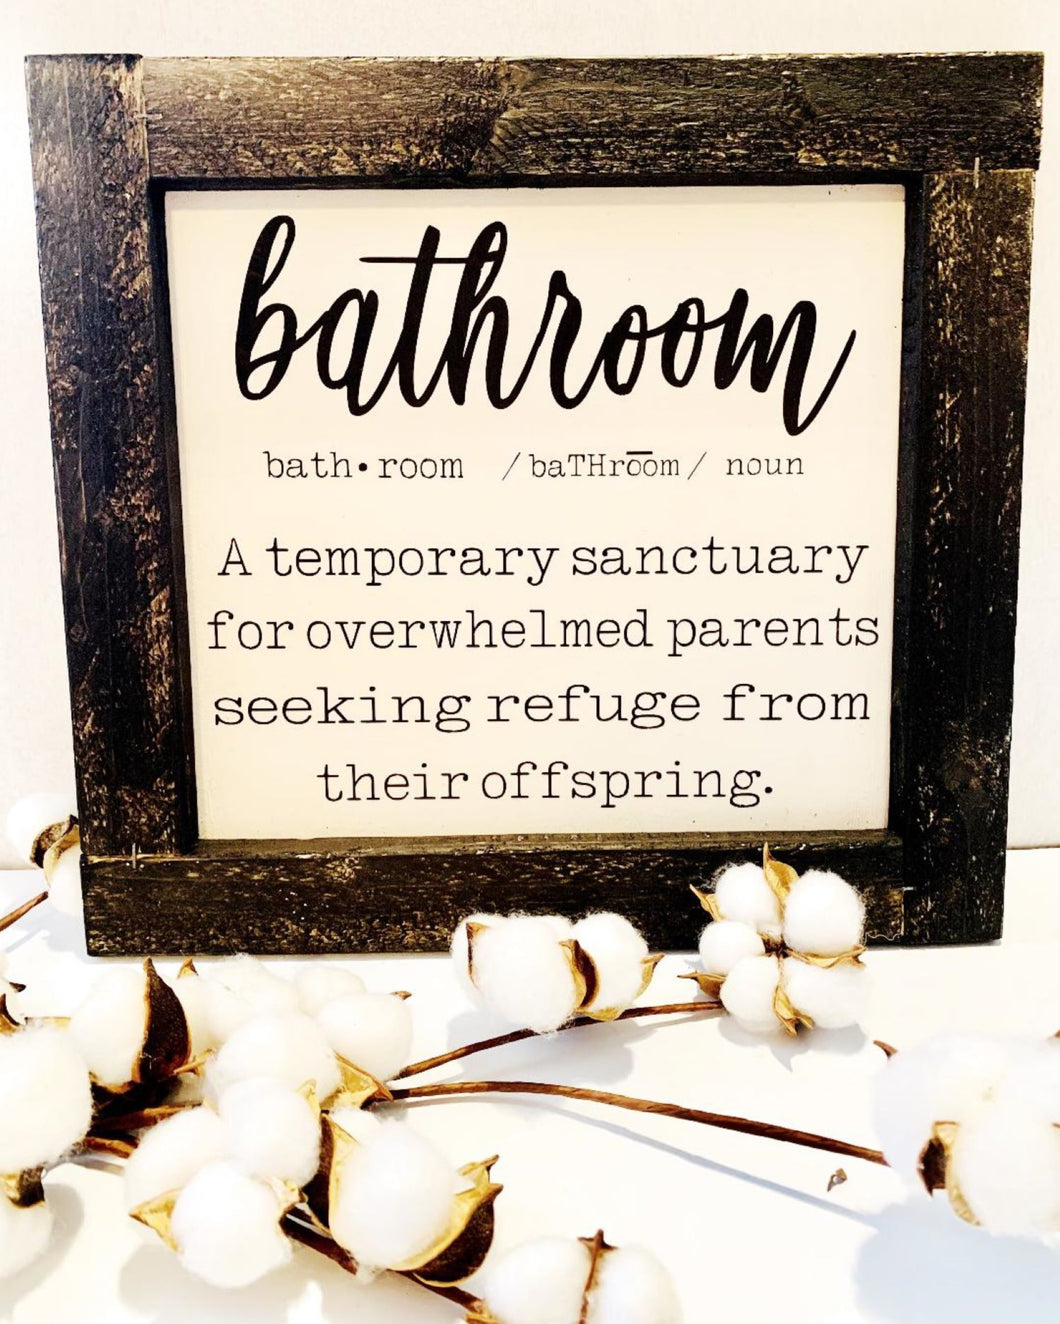 Bathroom definition sign